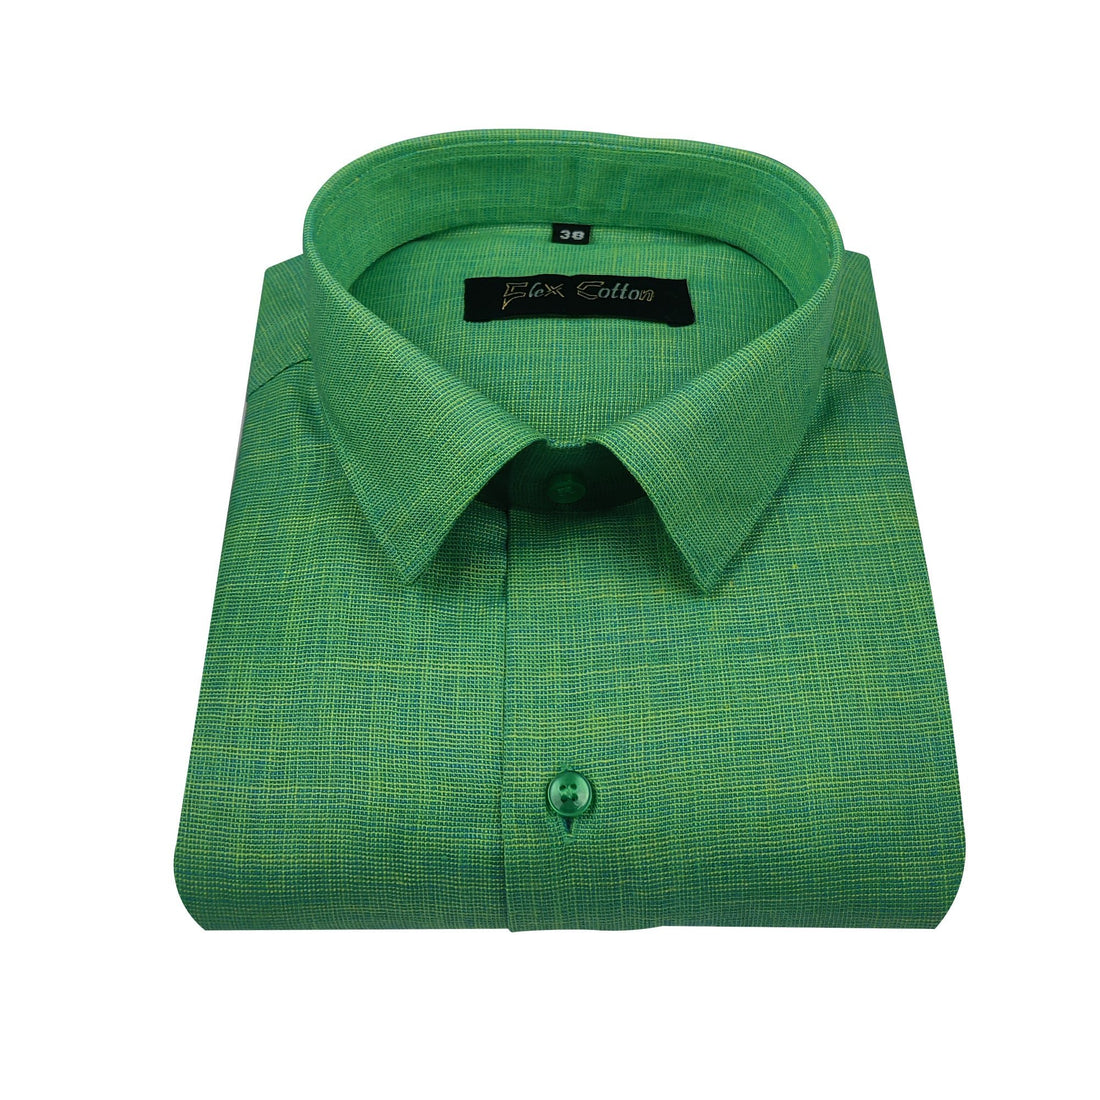 Leaf Green Color Dual Tone Matty Cotton Shirt For Men&